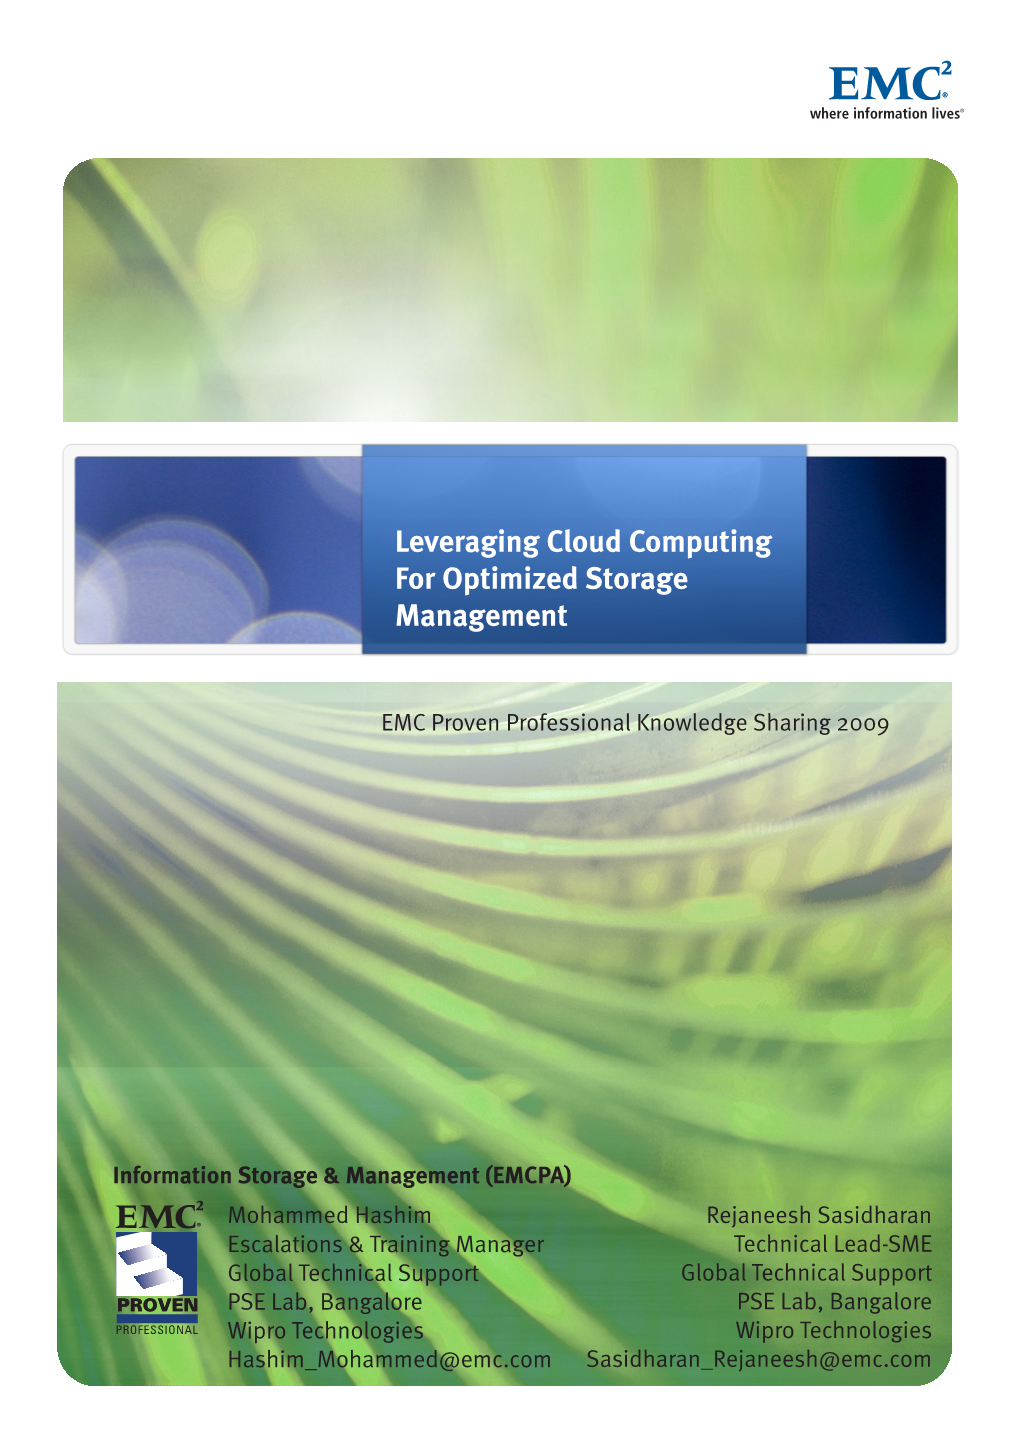 Leveraging Cloud Computing for Optimized Storage Management